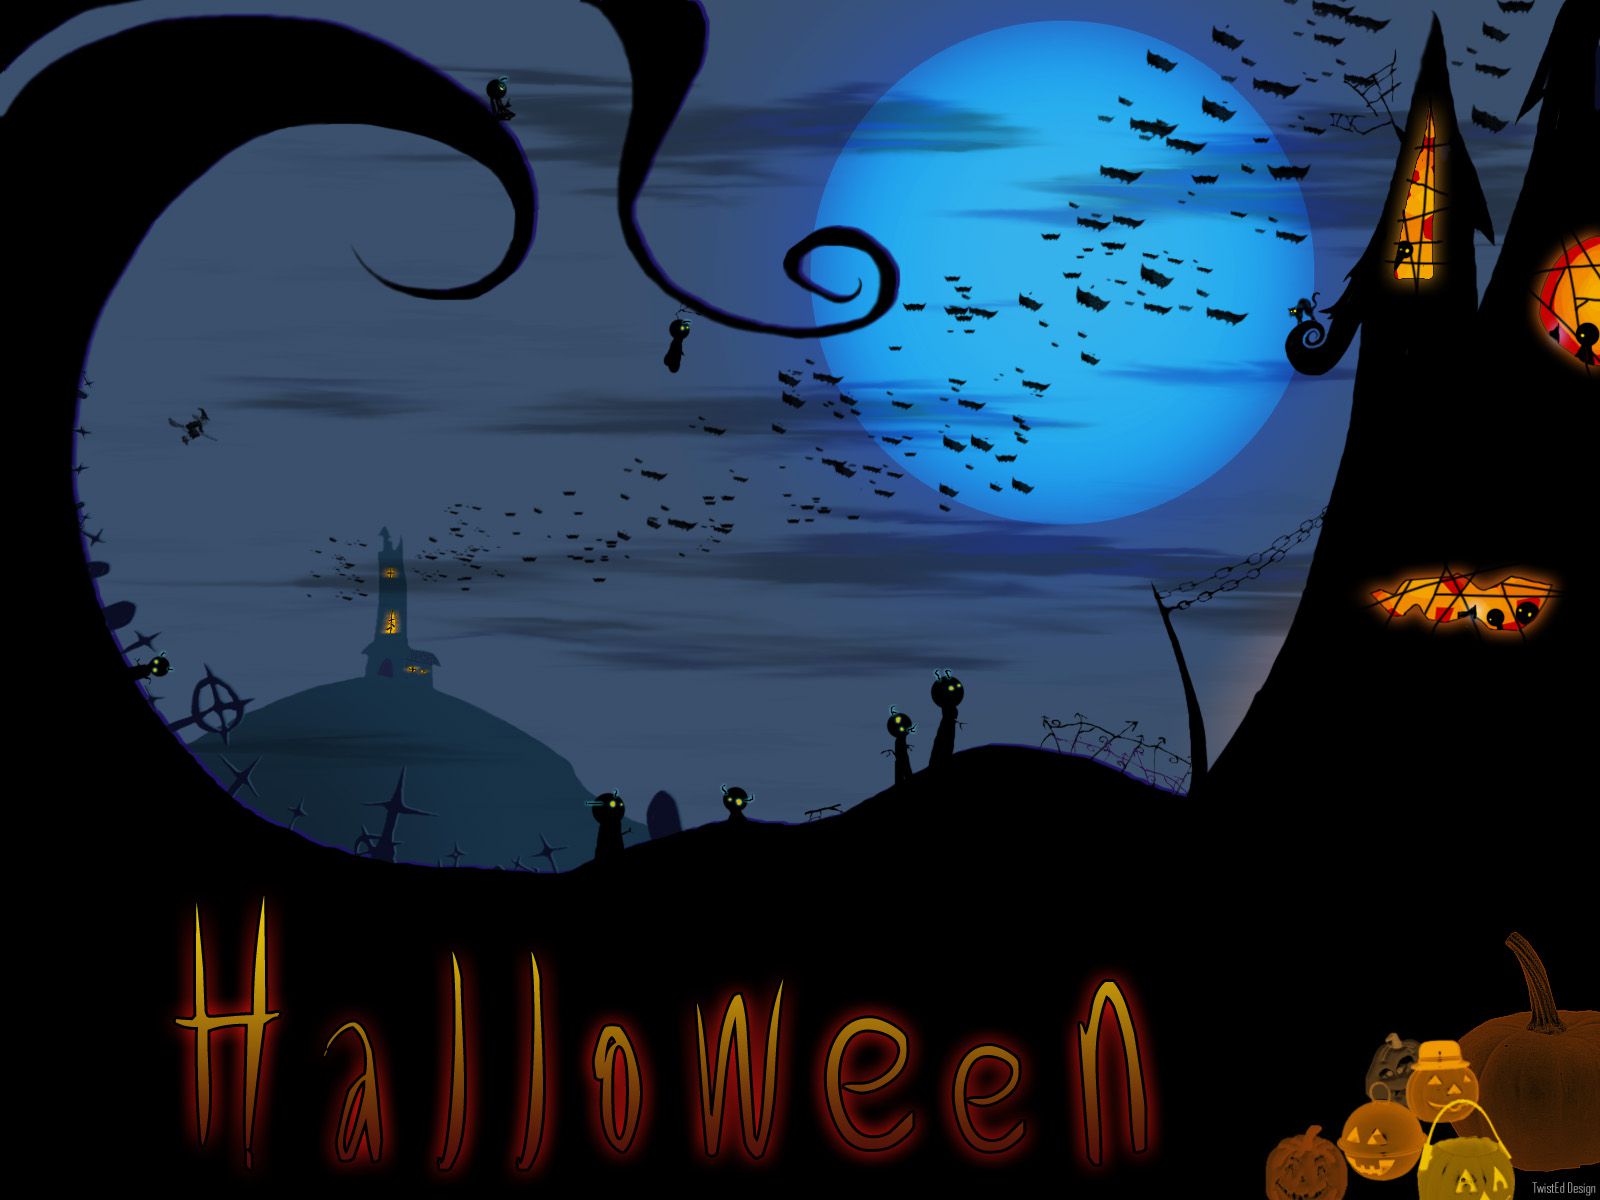 Spooky And Fun Halloween Wallpaper